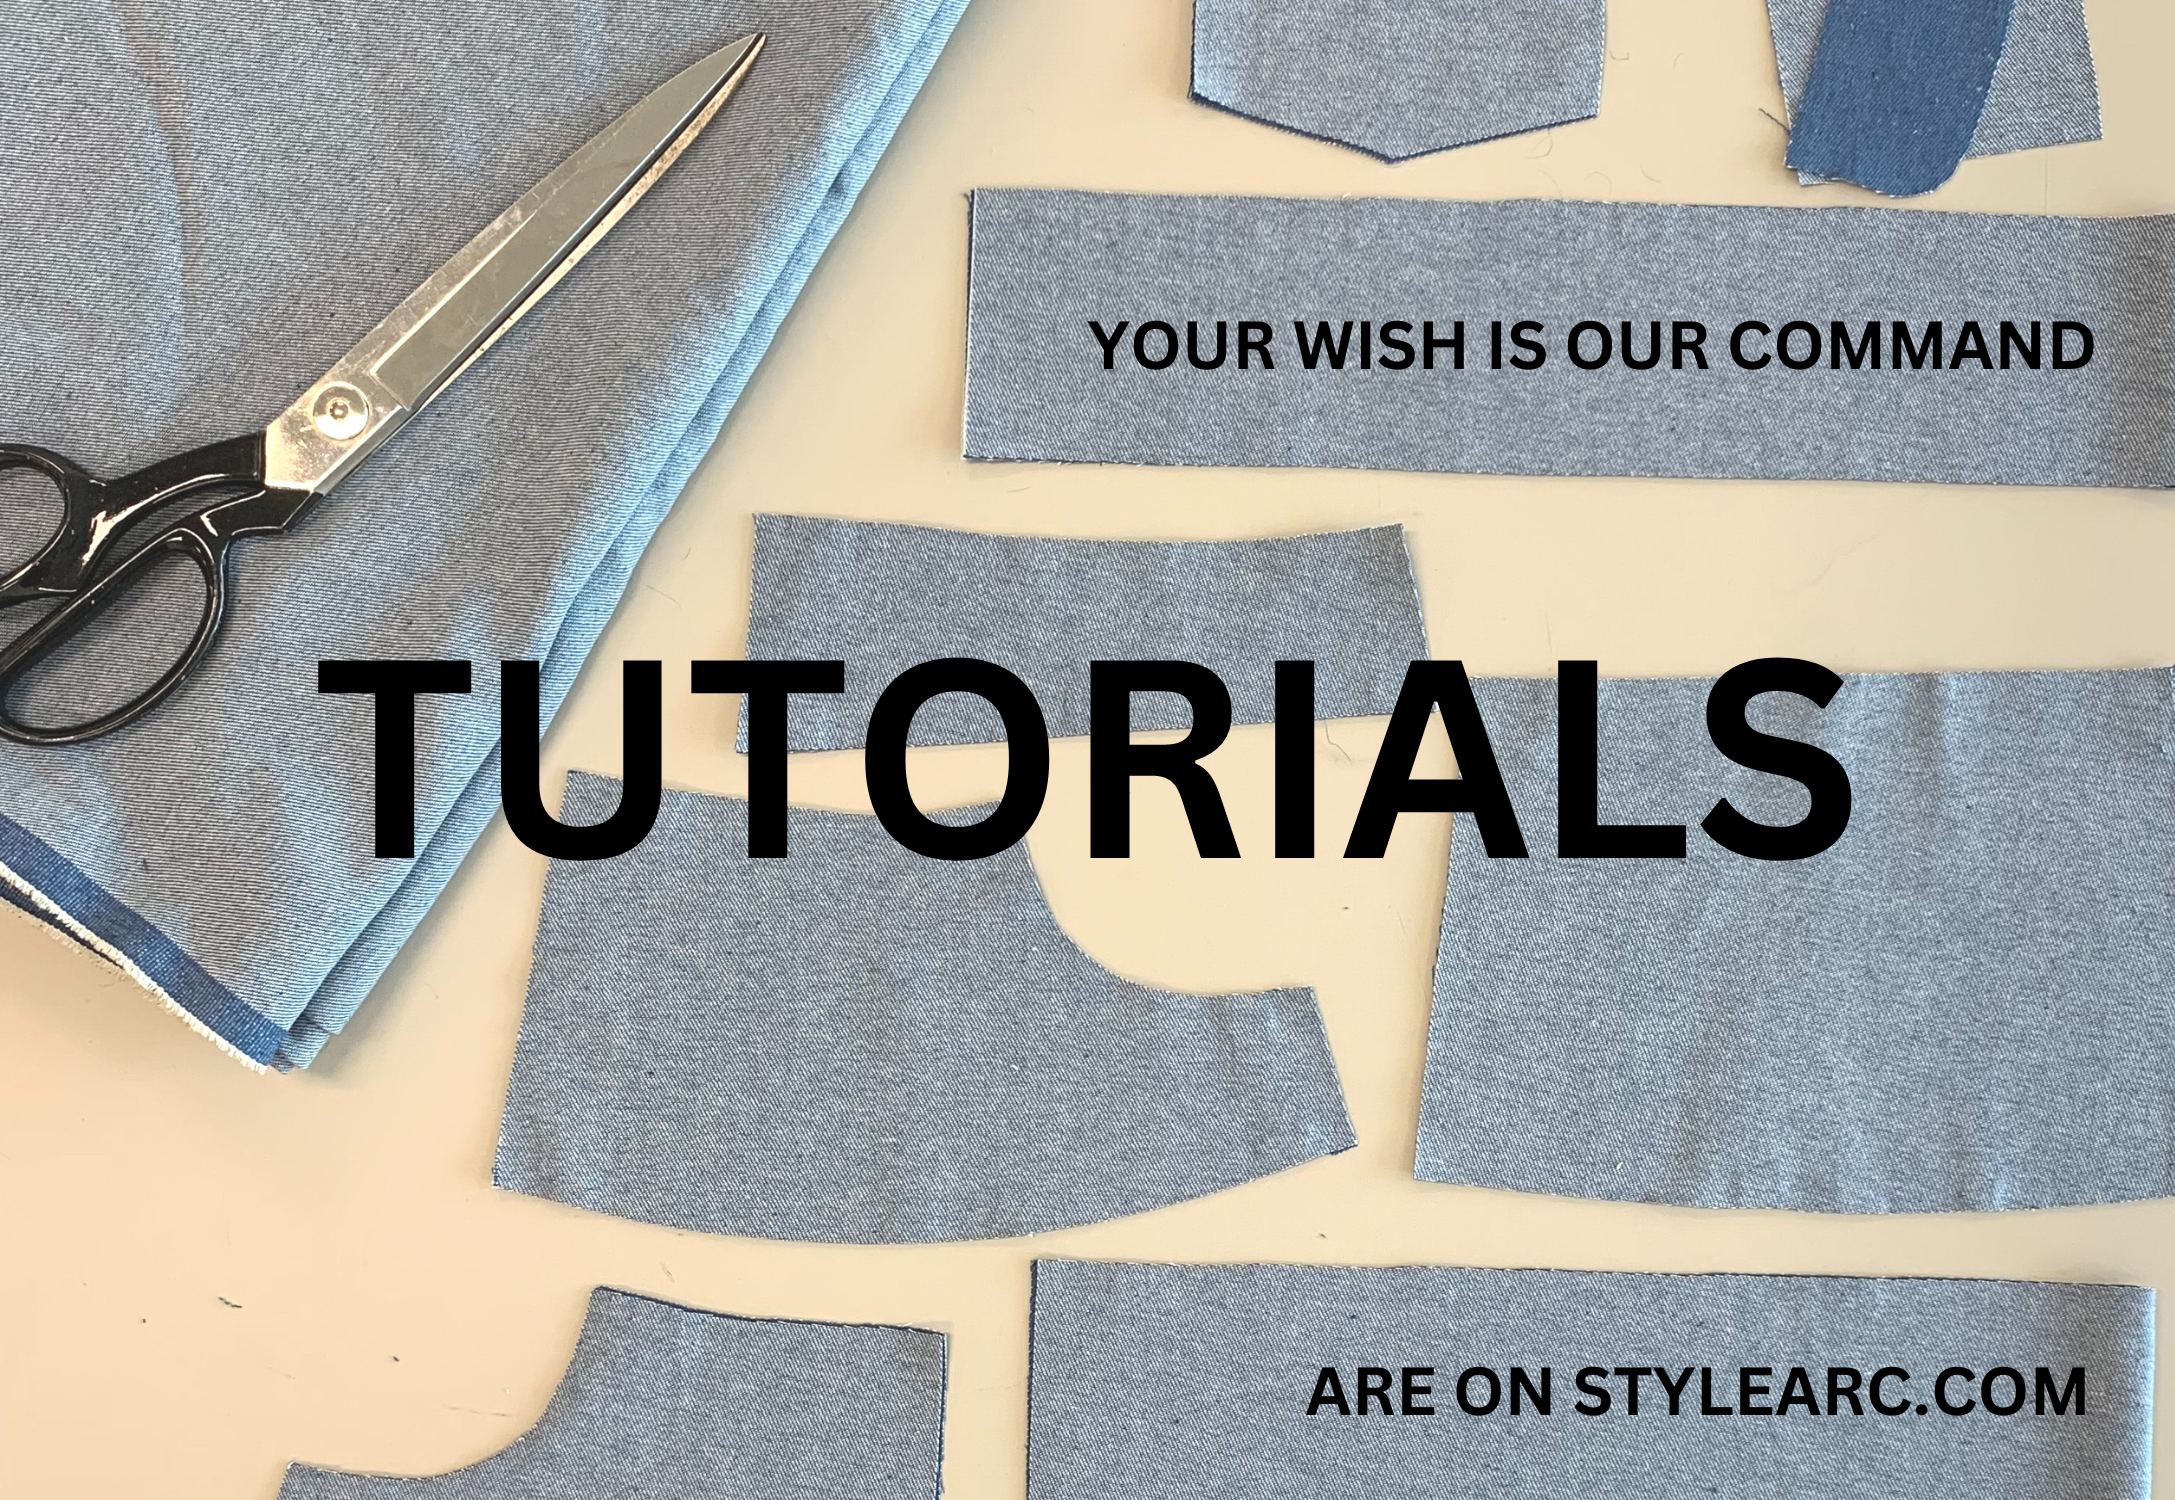 Tutorials on stylearc.com